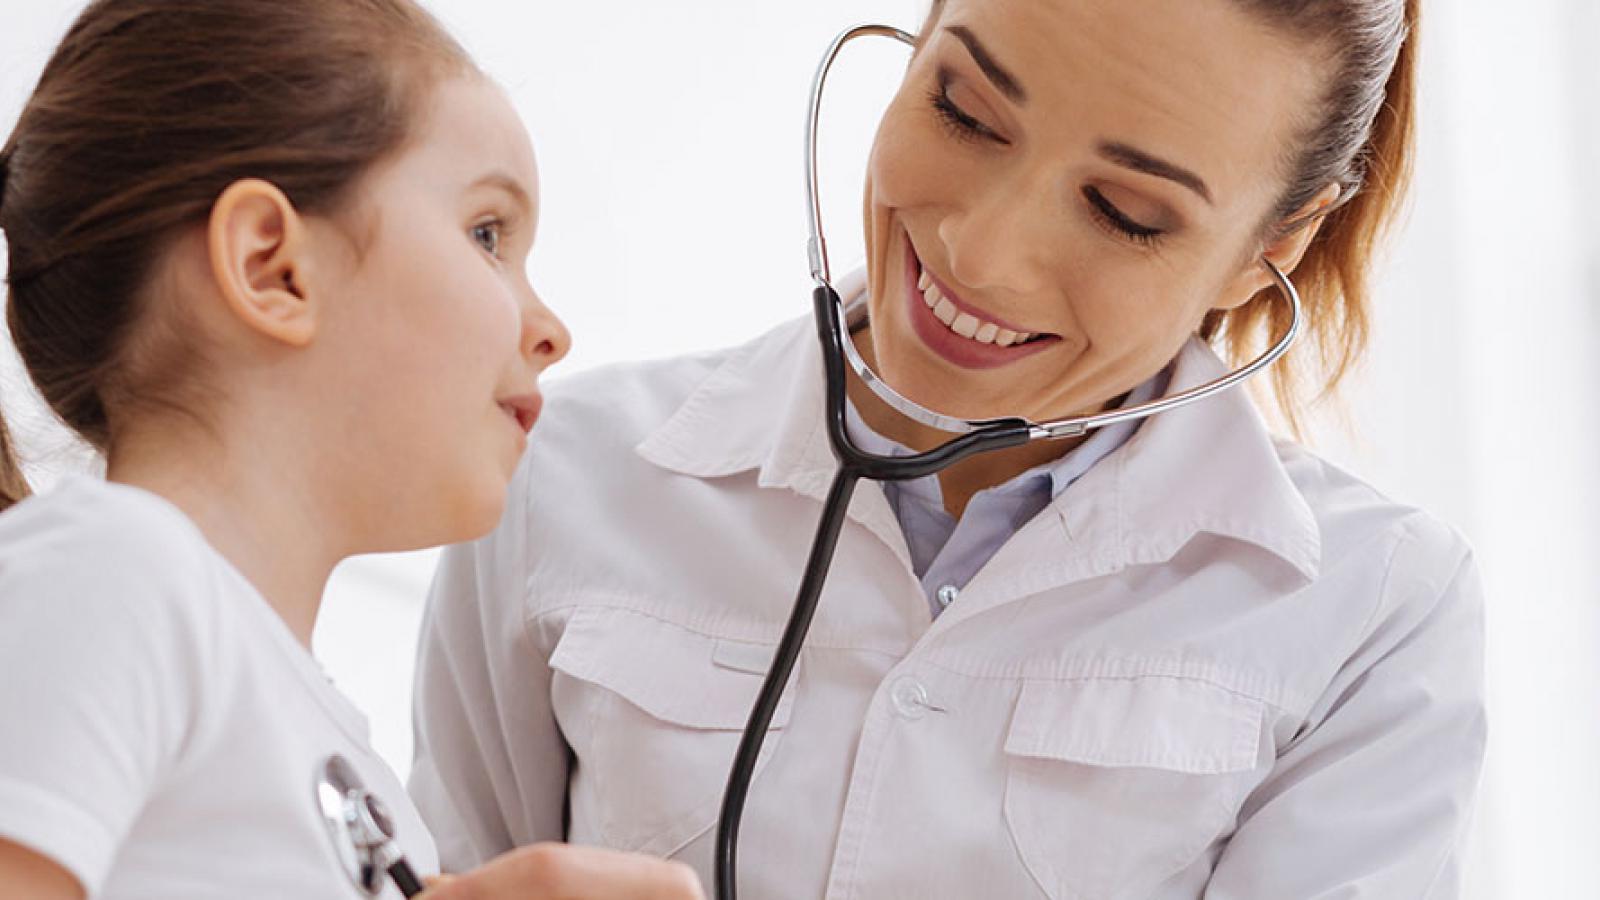 Doctor using stethoscope on child 